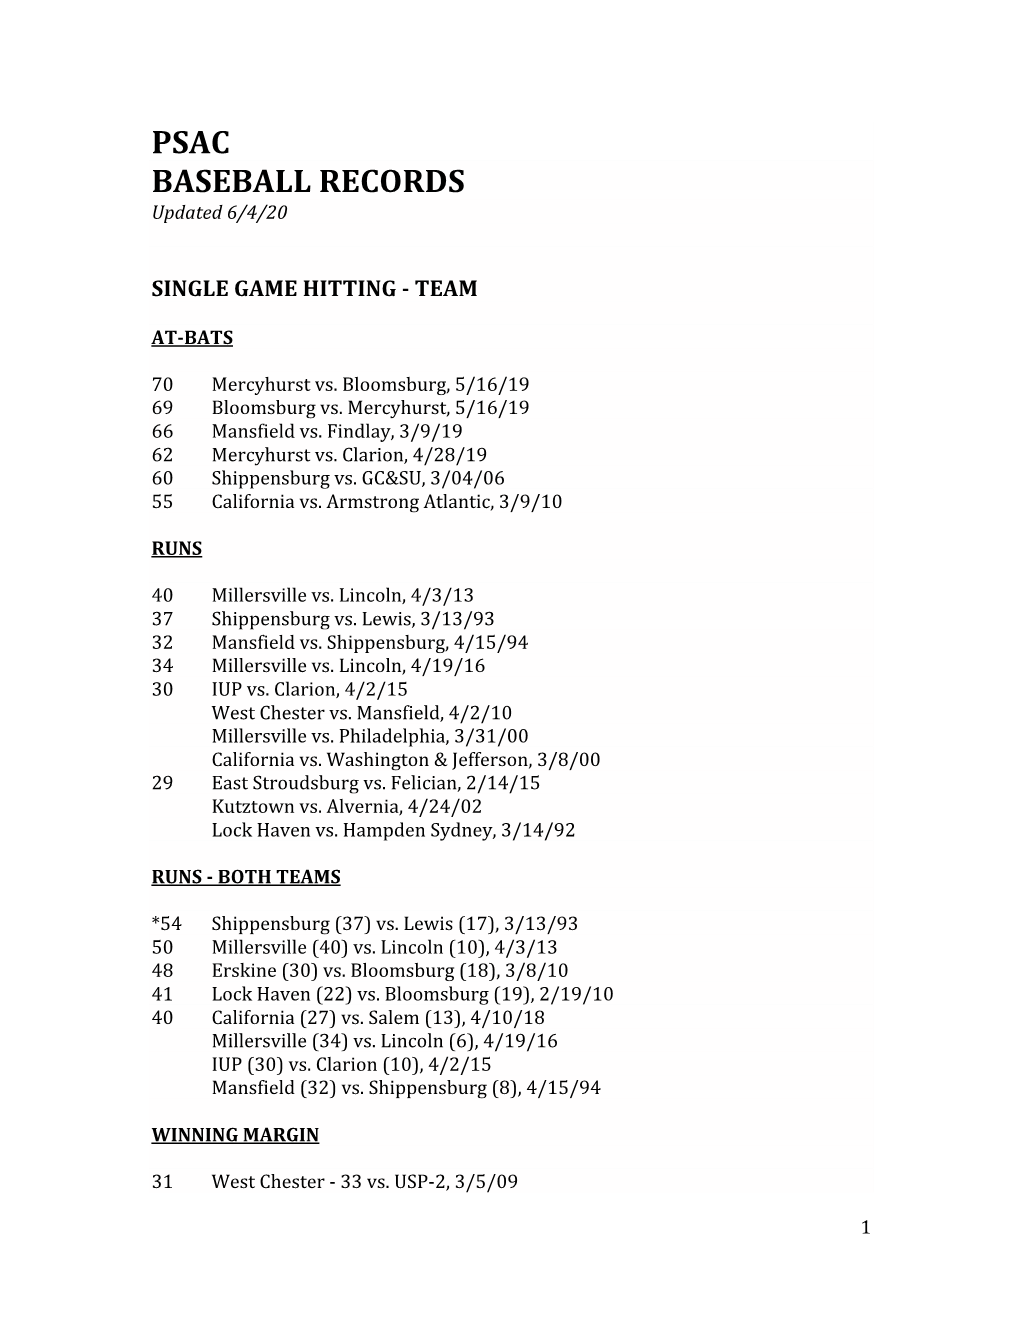 Baseball Single Game Records